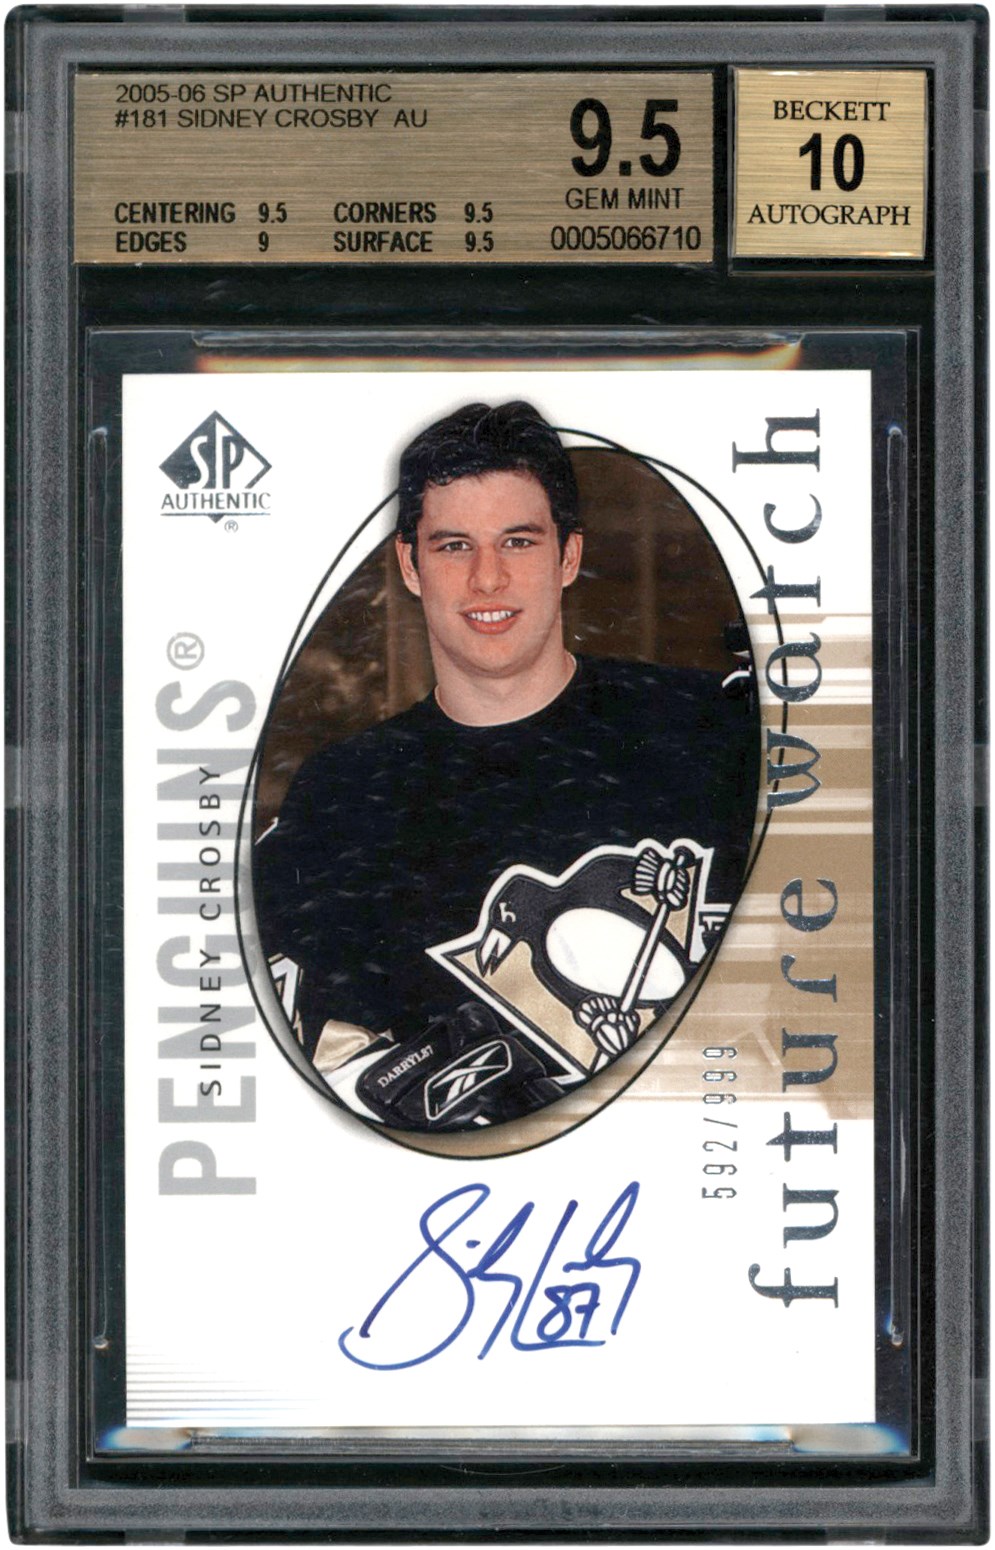 Hockey Cards - 2005-2006 SP Authentic Hockey #181 Sidney Crosby Rookie Autograph Card #592/999 BGS GEM MINT 9.5 Auto 10